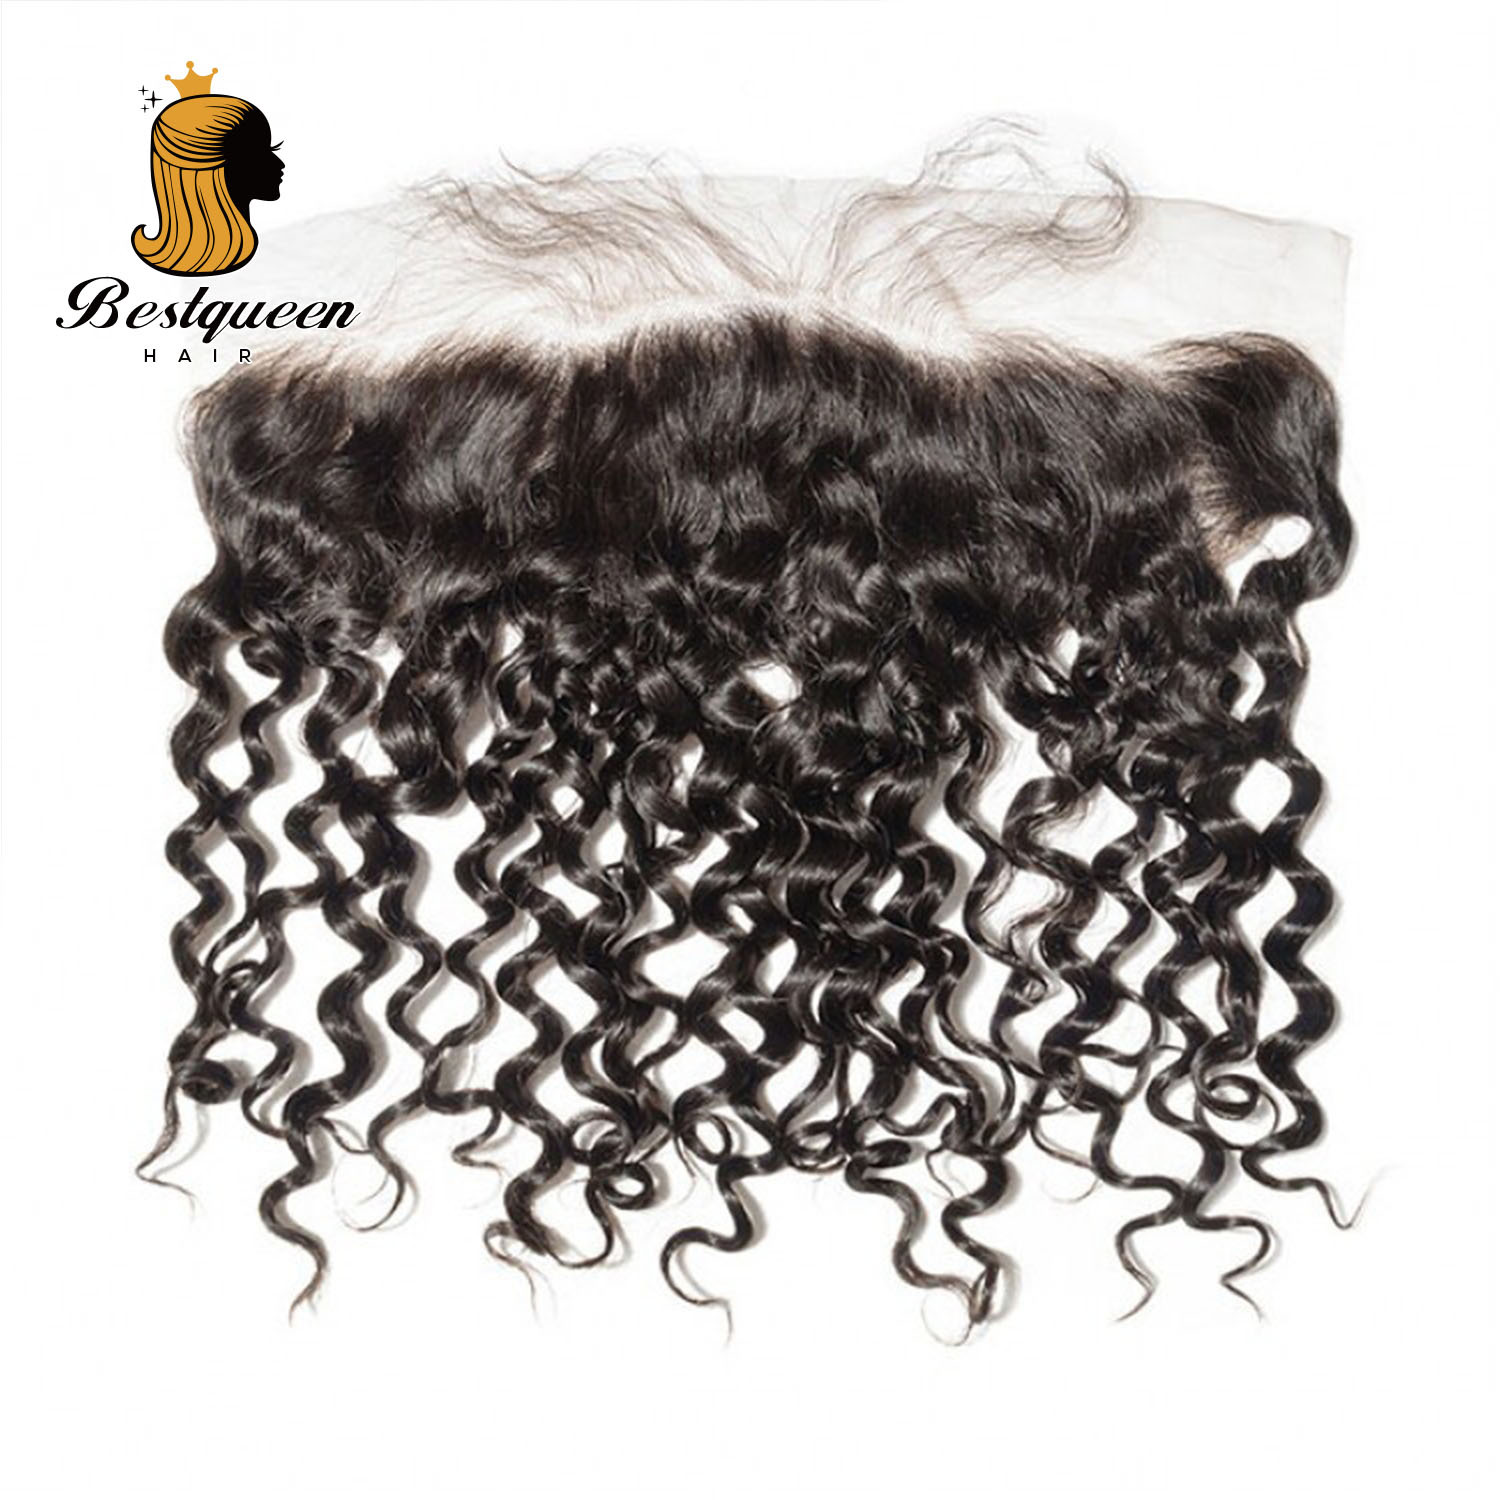 Bestqueen Hair Malaysian Italian Curly 5*5Hd Lace Closures ,Free Part Italian Curly Human Hair Closure  